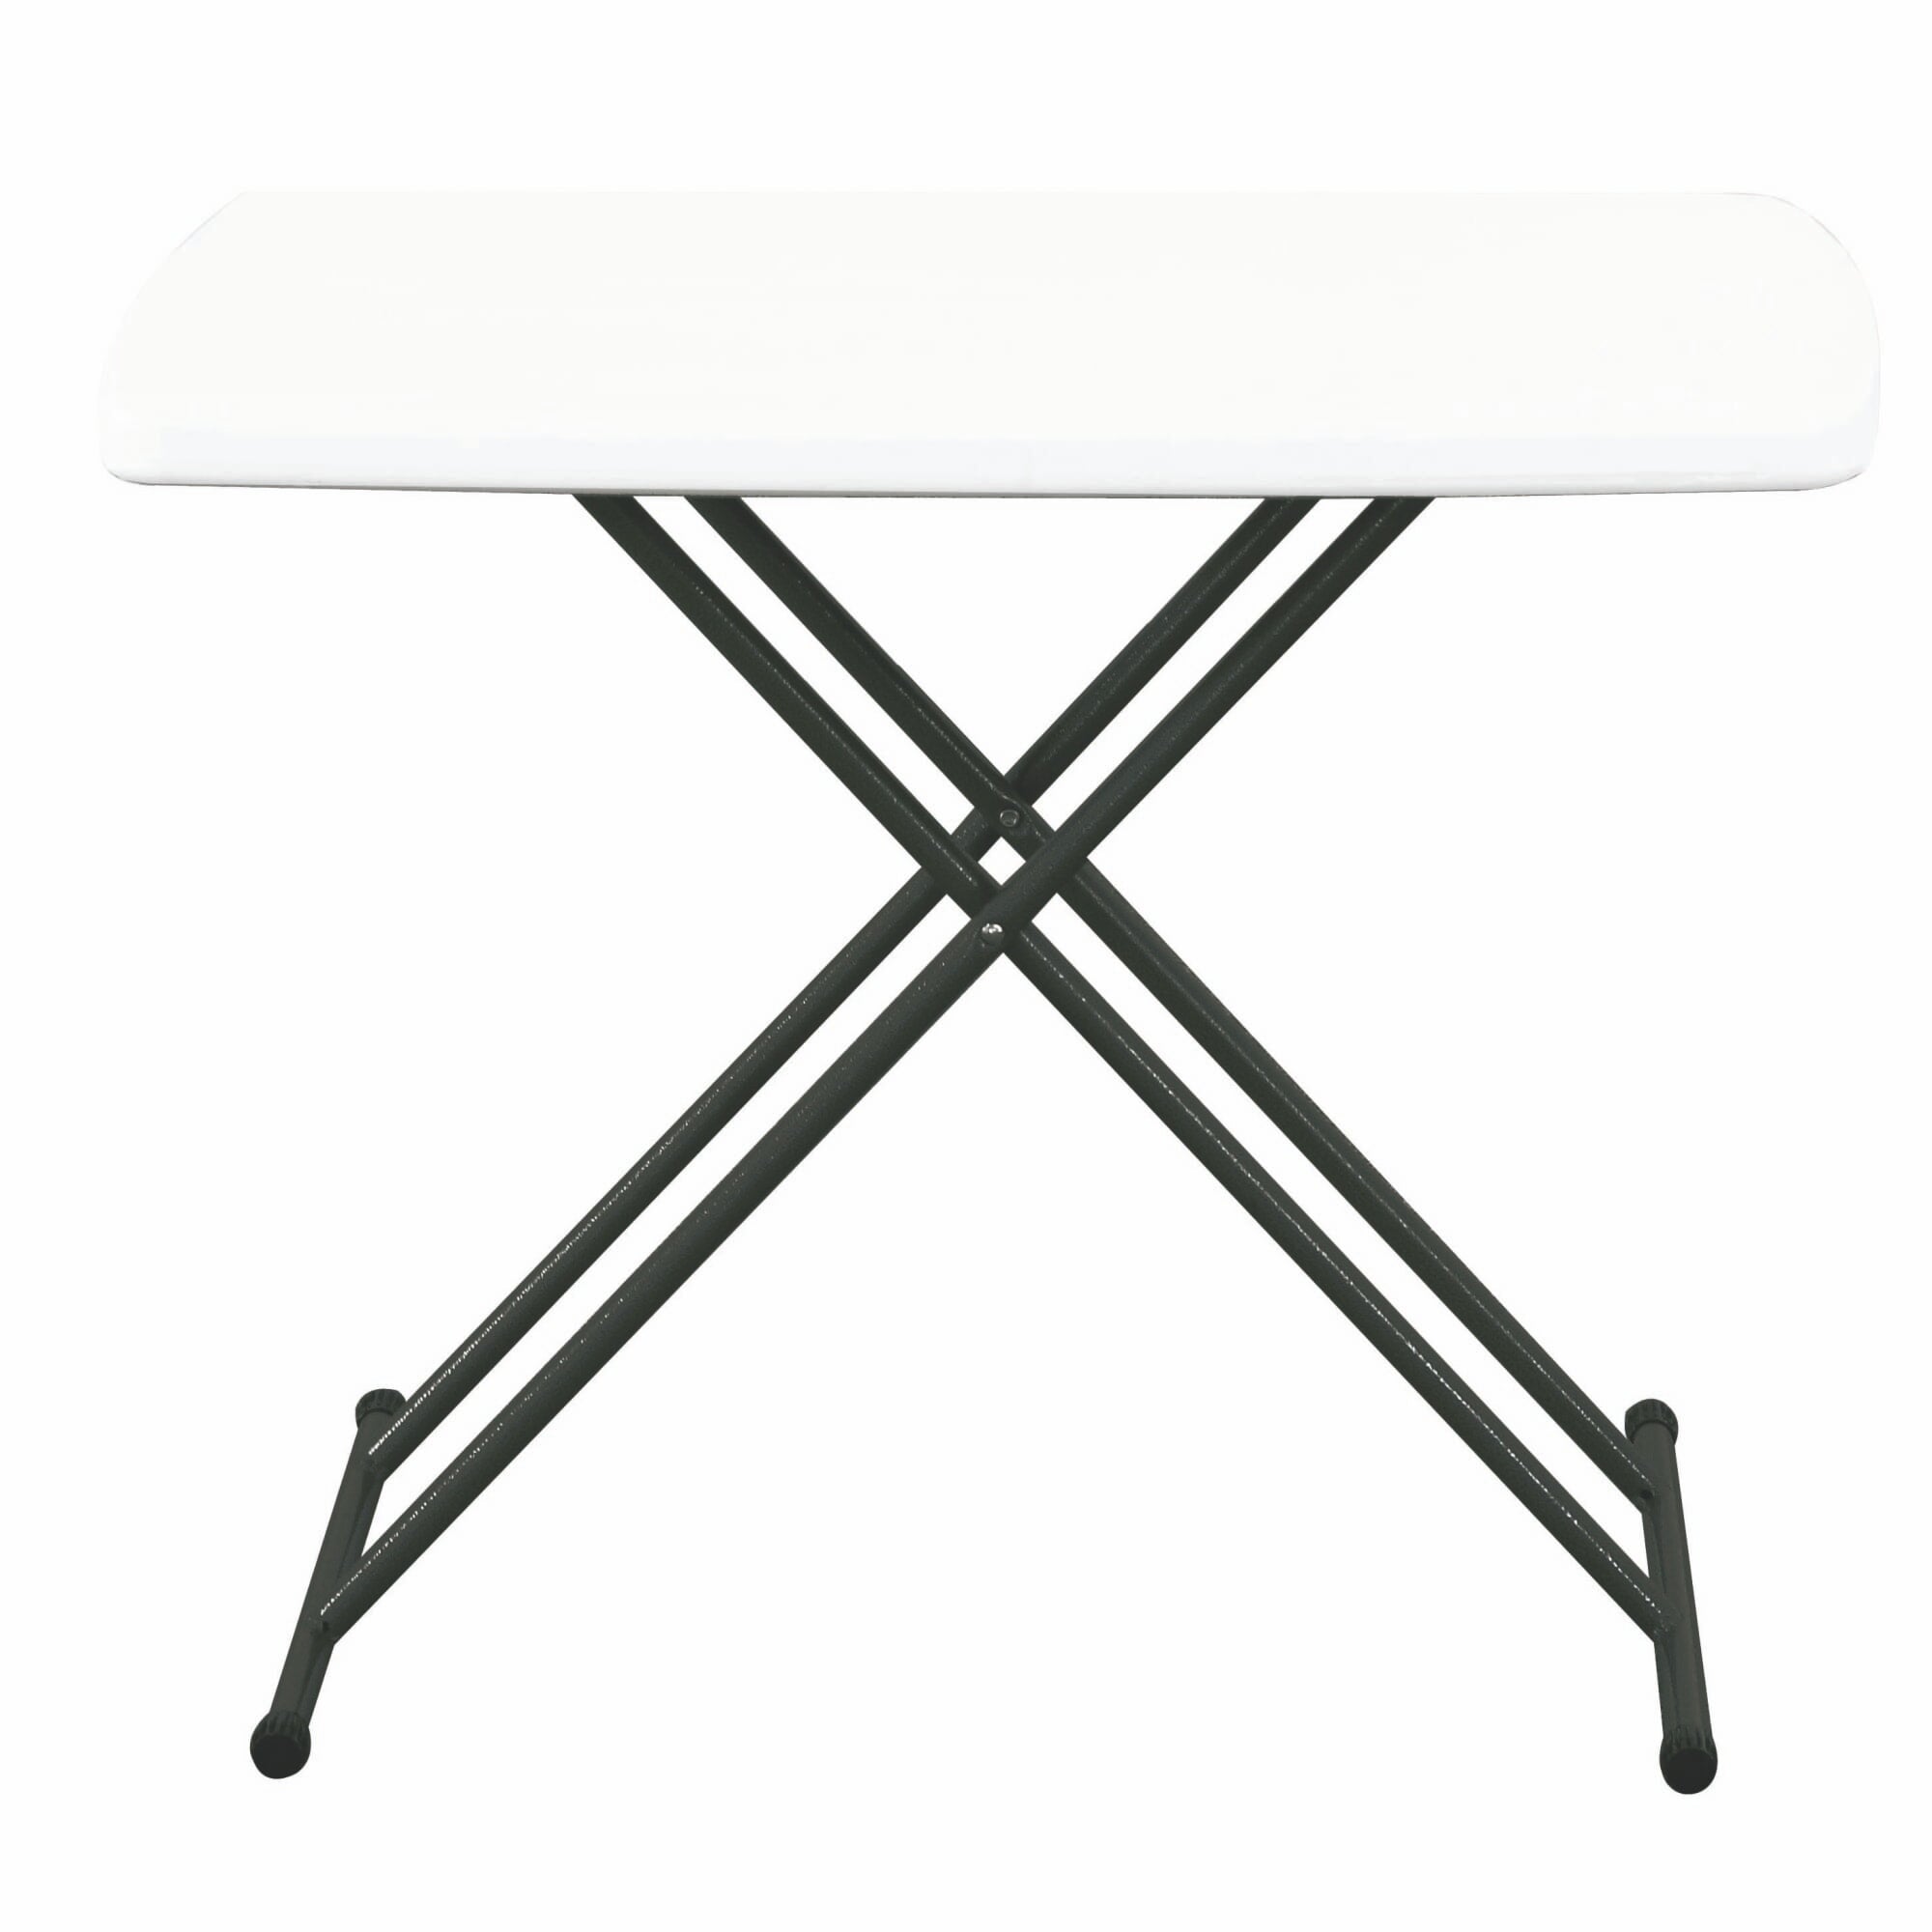 Garbar simple rectangular folding table indoor,